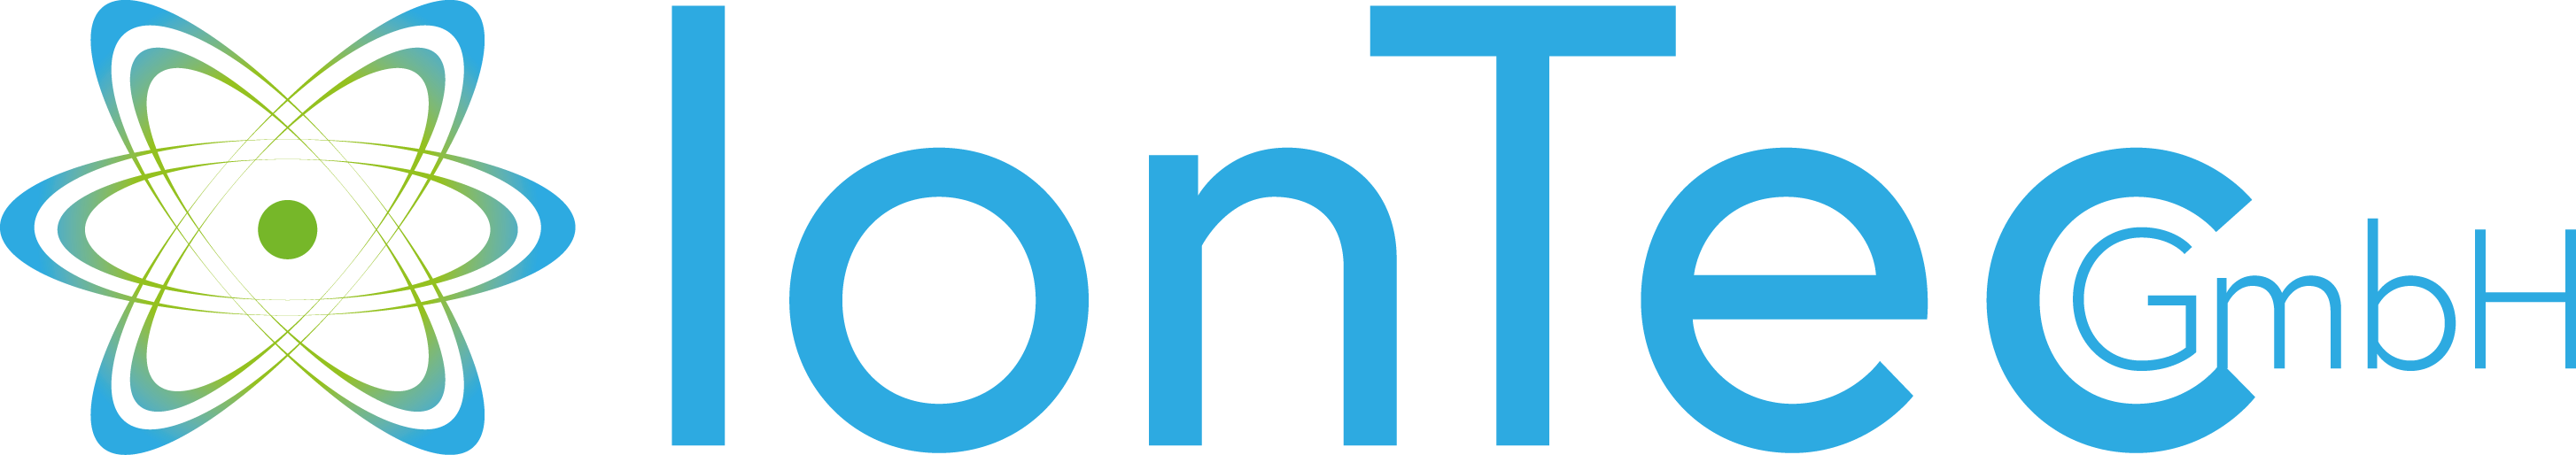 Ion-Tec Logo